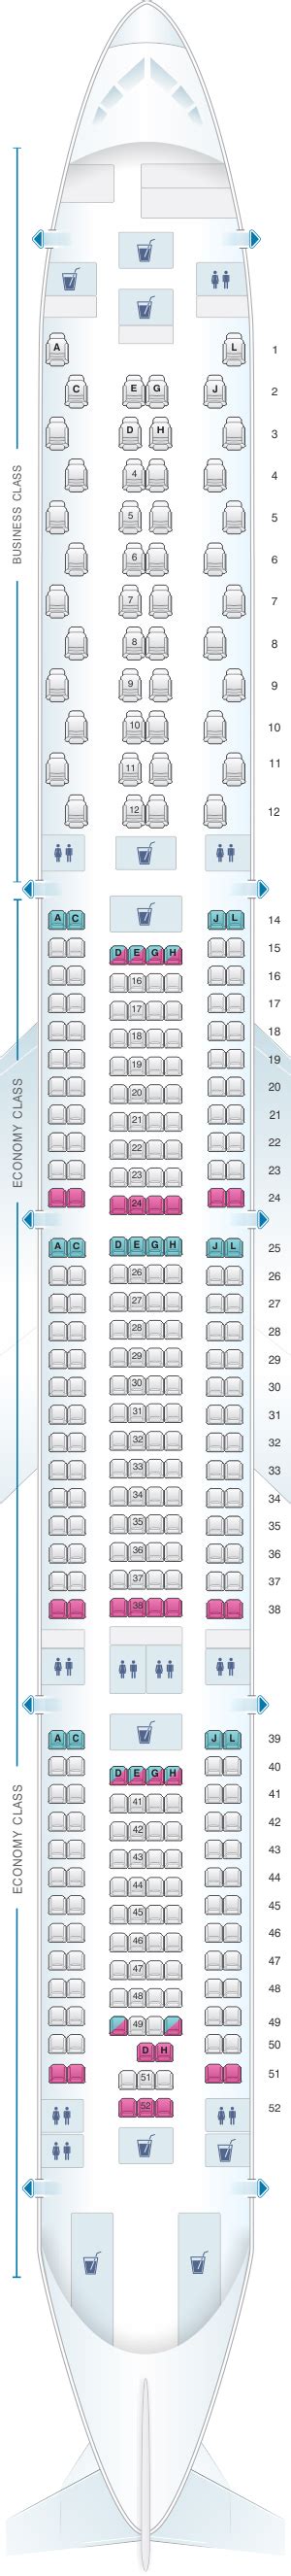 Iberia A350 Seat Map